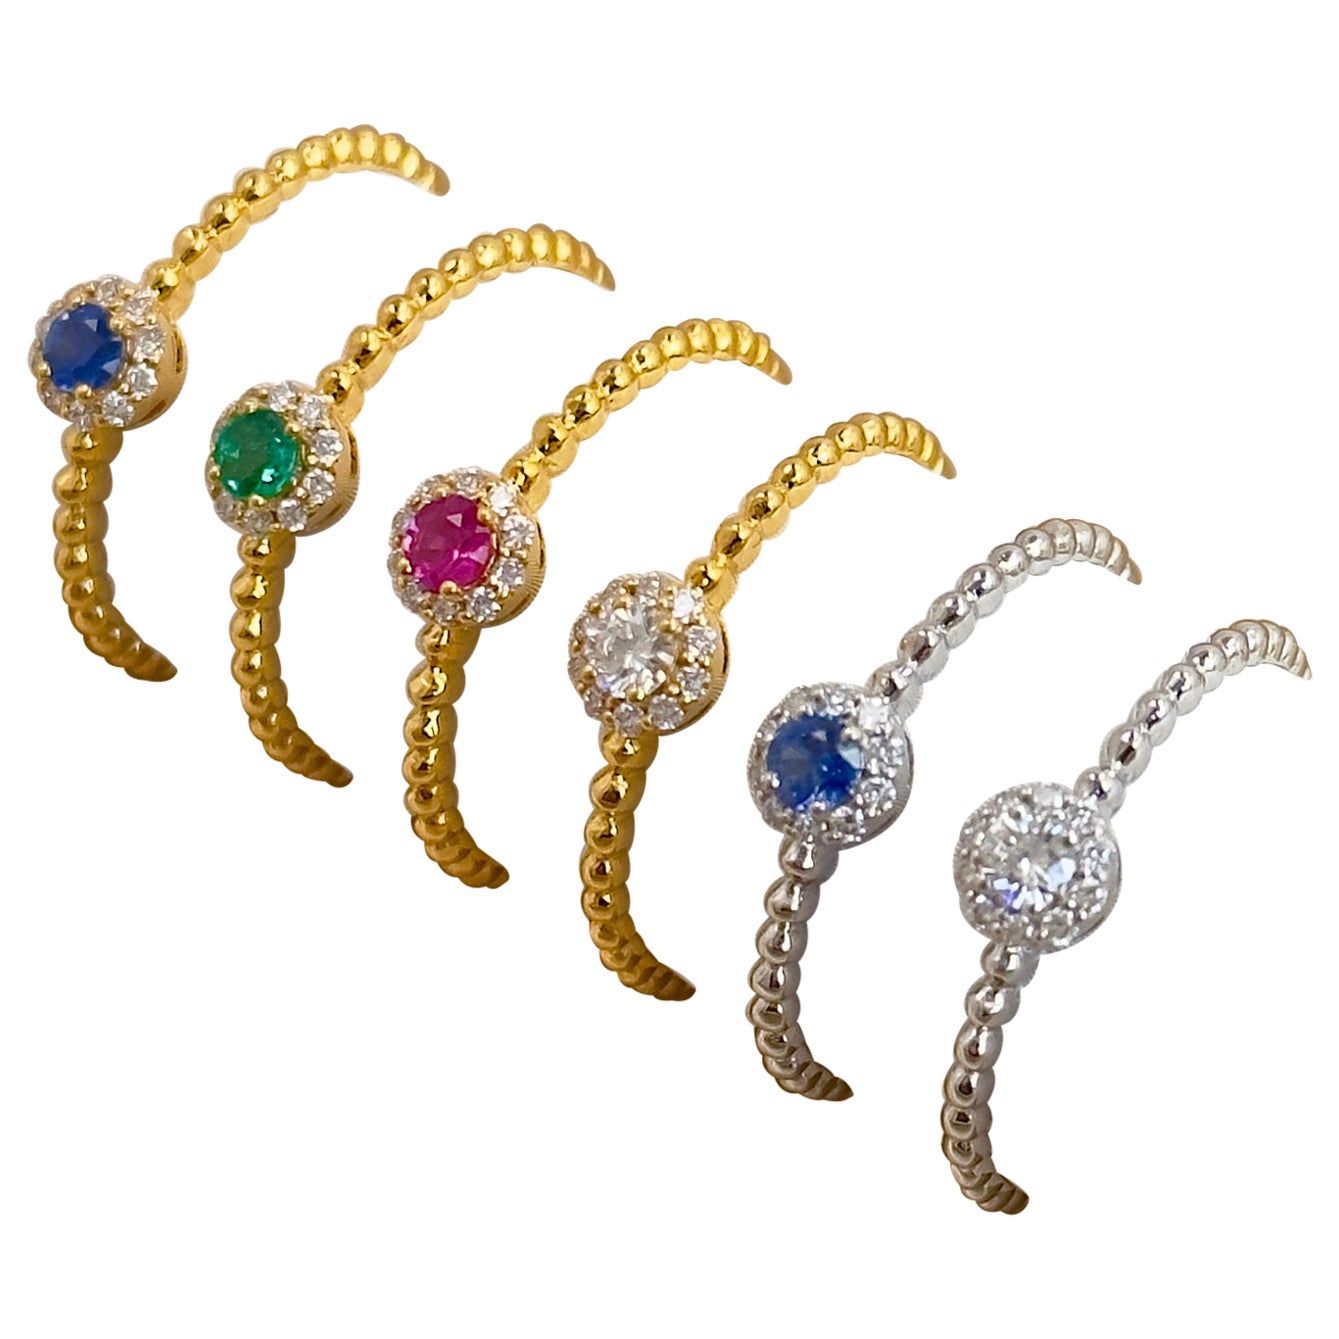 Gemstone & Diamond Solitaire Ring, Stackable Diamond Rings, Birthstone Rings 18k